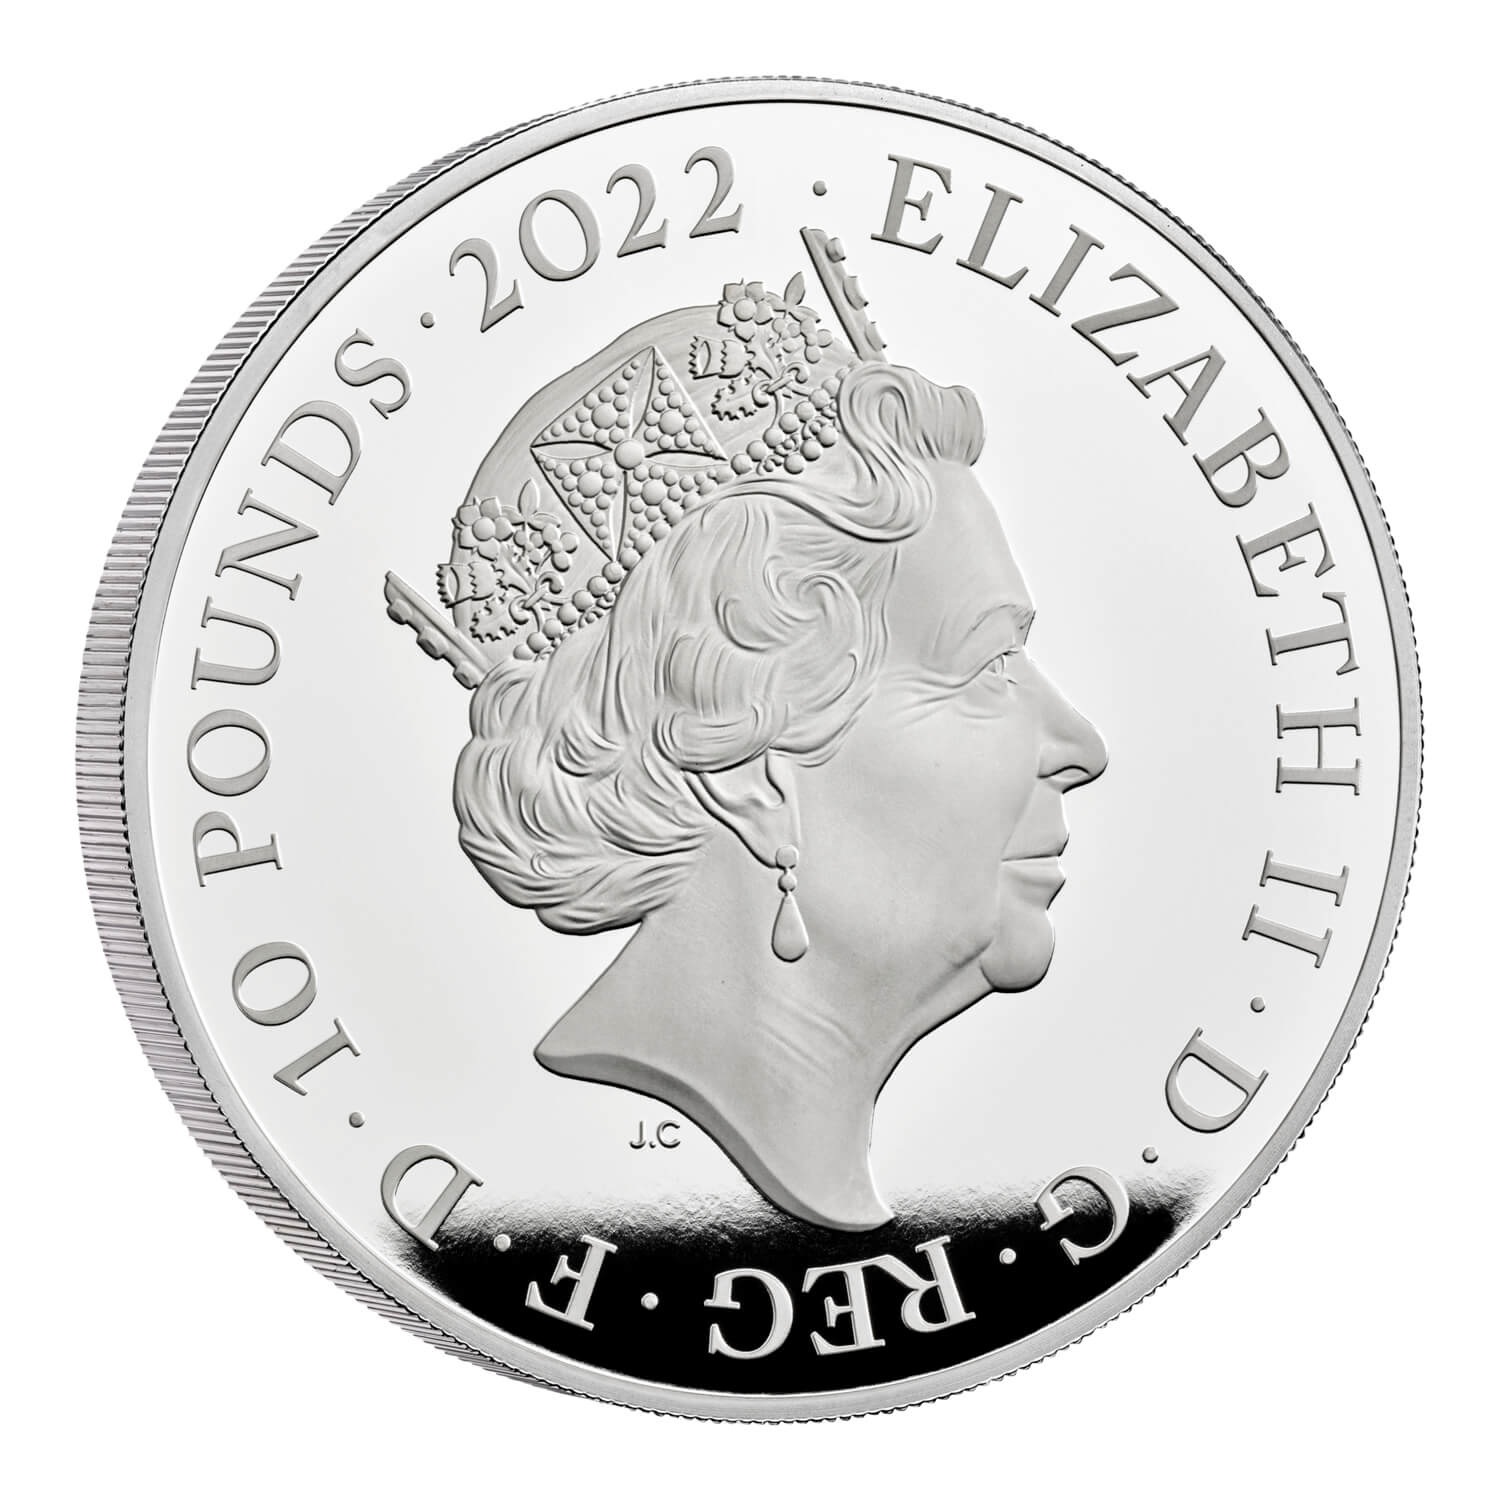 (W185.10.P.2022.UK22E7S5O) 10 Pounds UK 2022 5 oz Proof silver - King Edward VII Obverse (zoom)